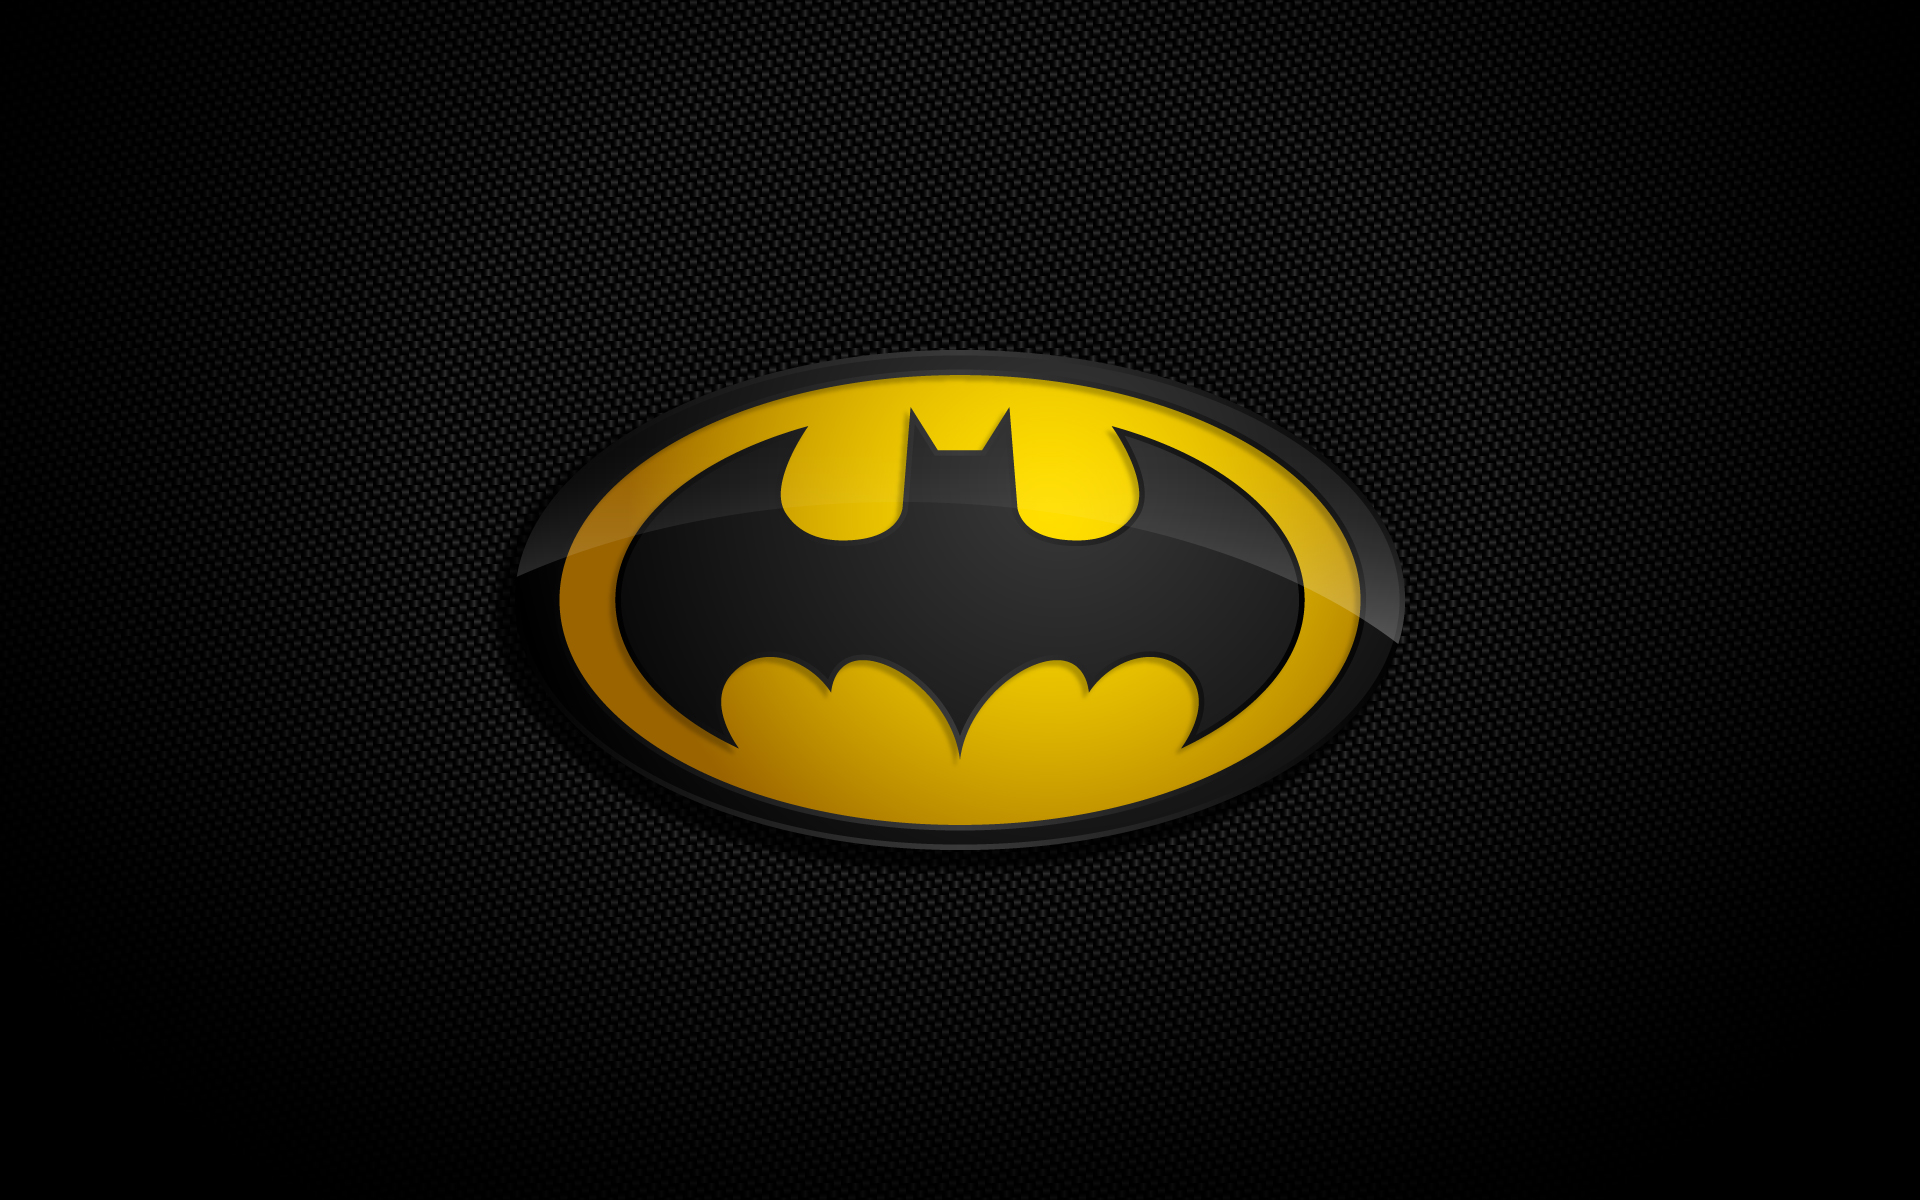 The Bat Signal from Gotham City